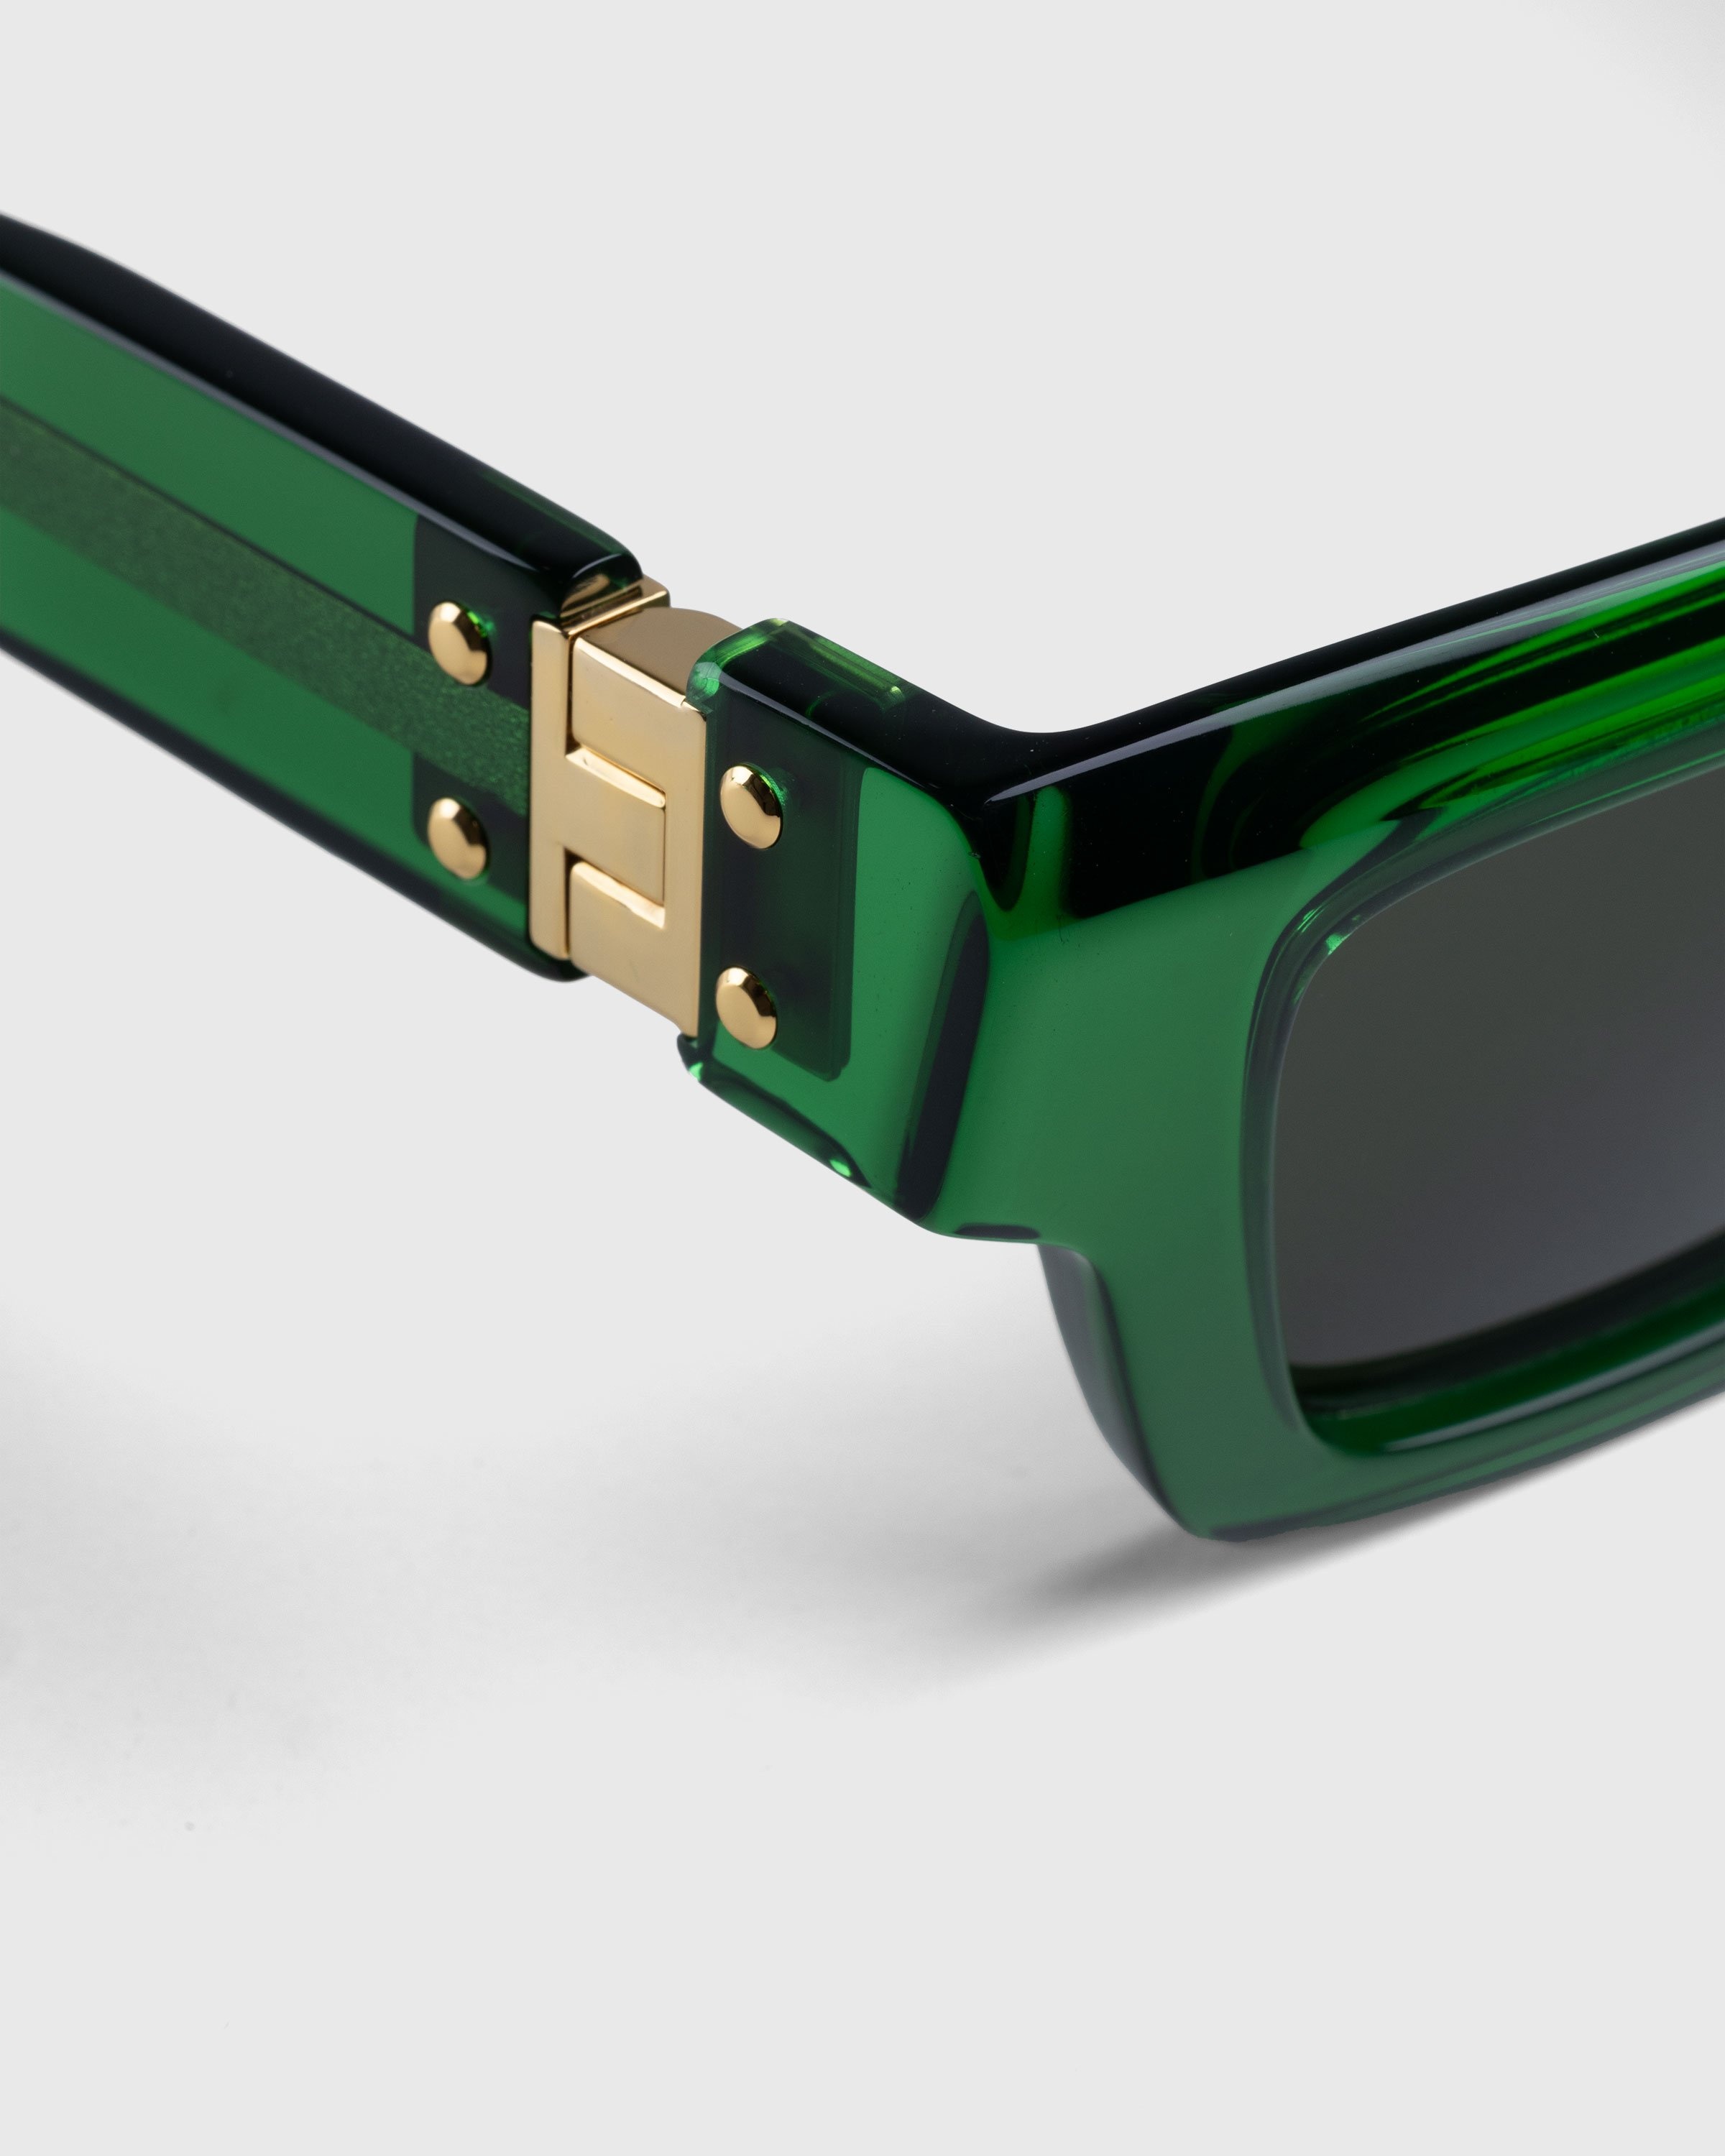 Bottega Veneta New Hinge Rectangular Sunglasses - Green Green Green